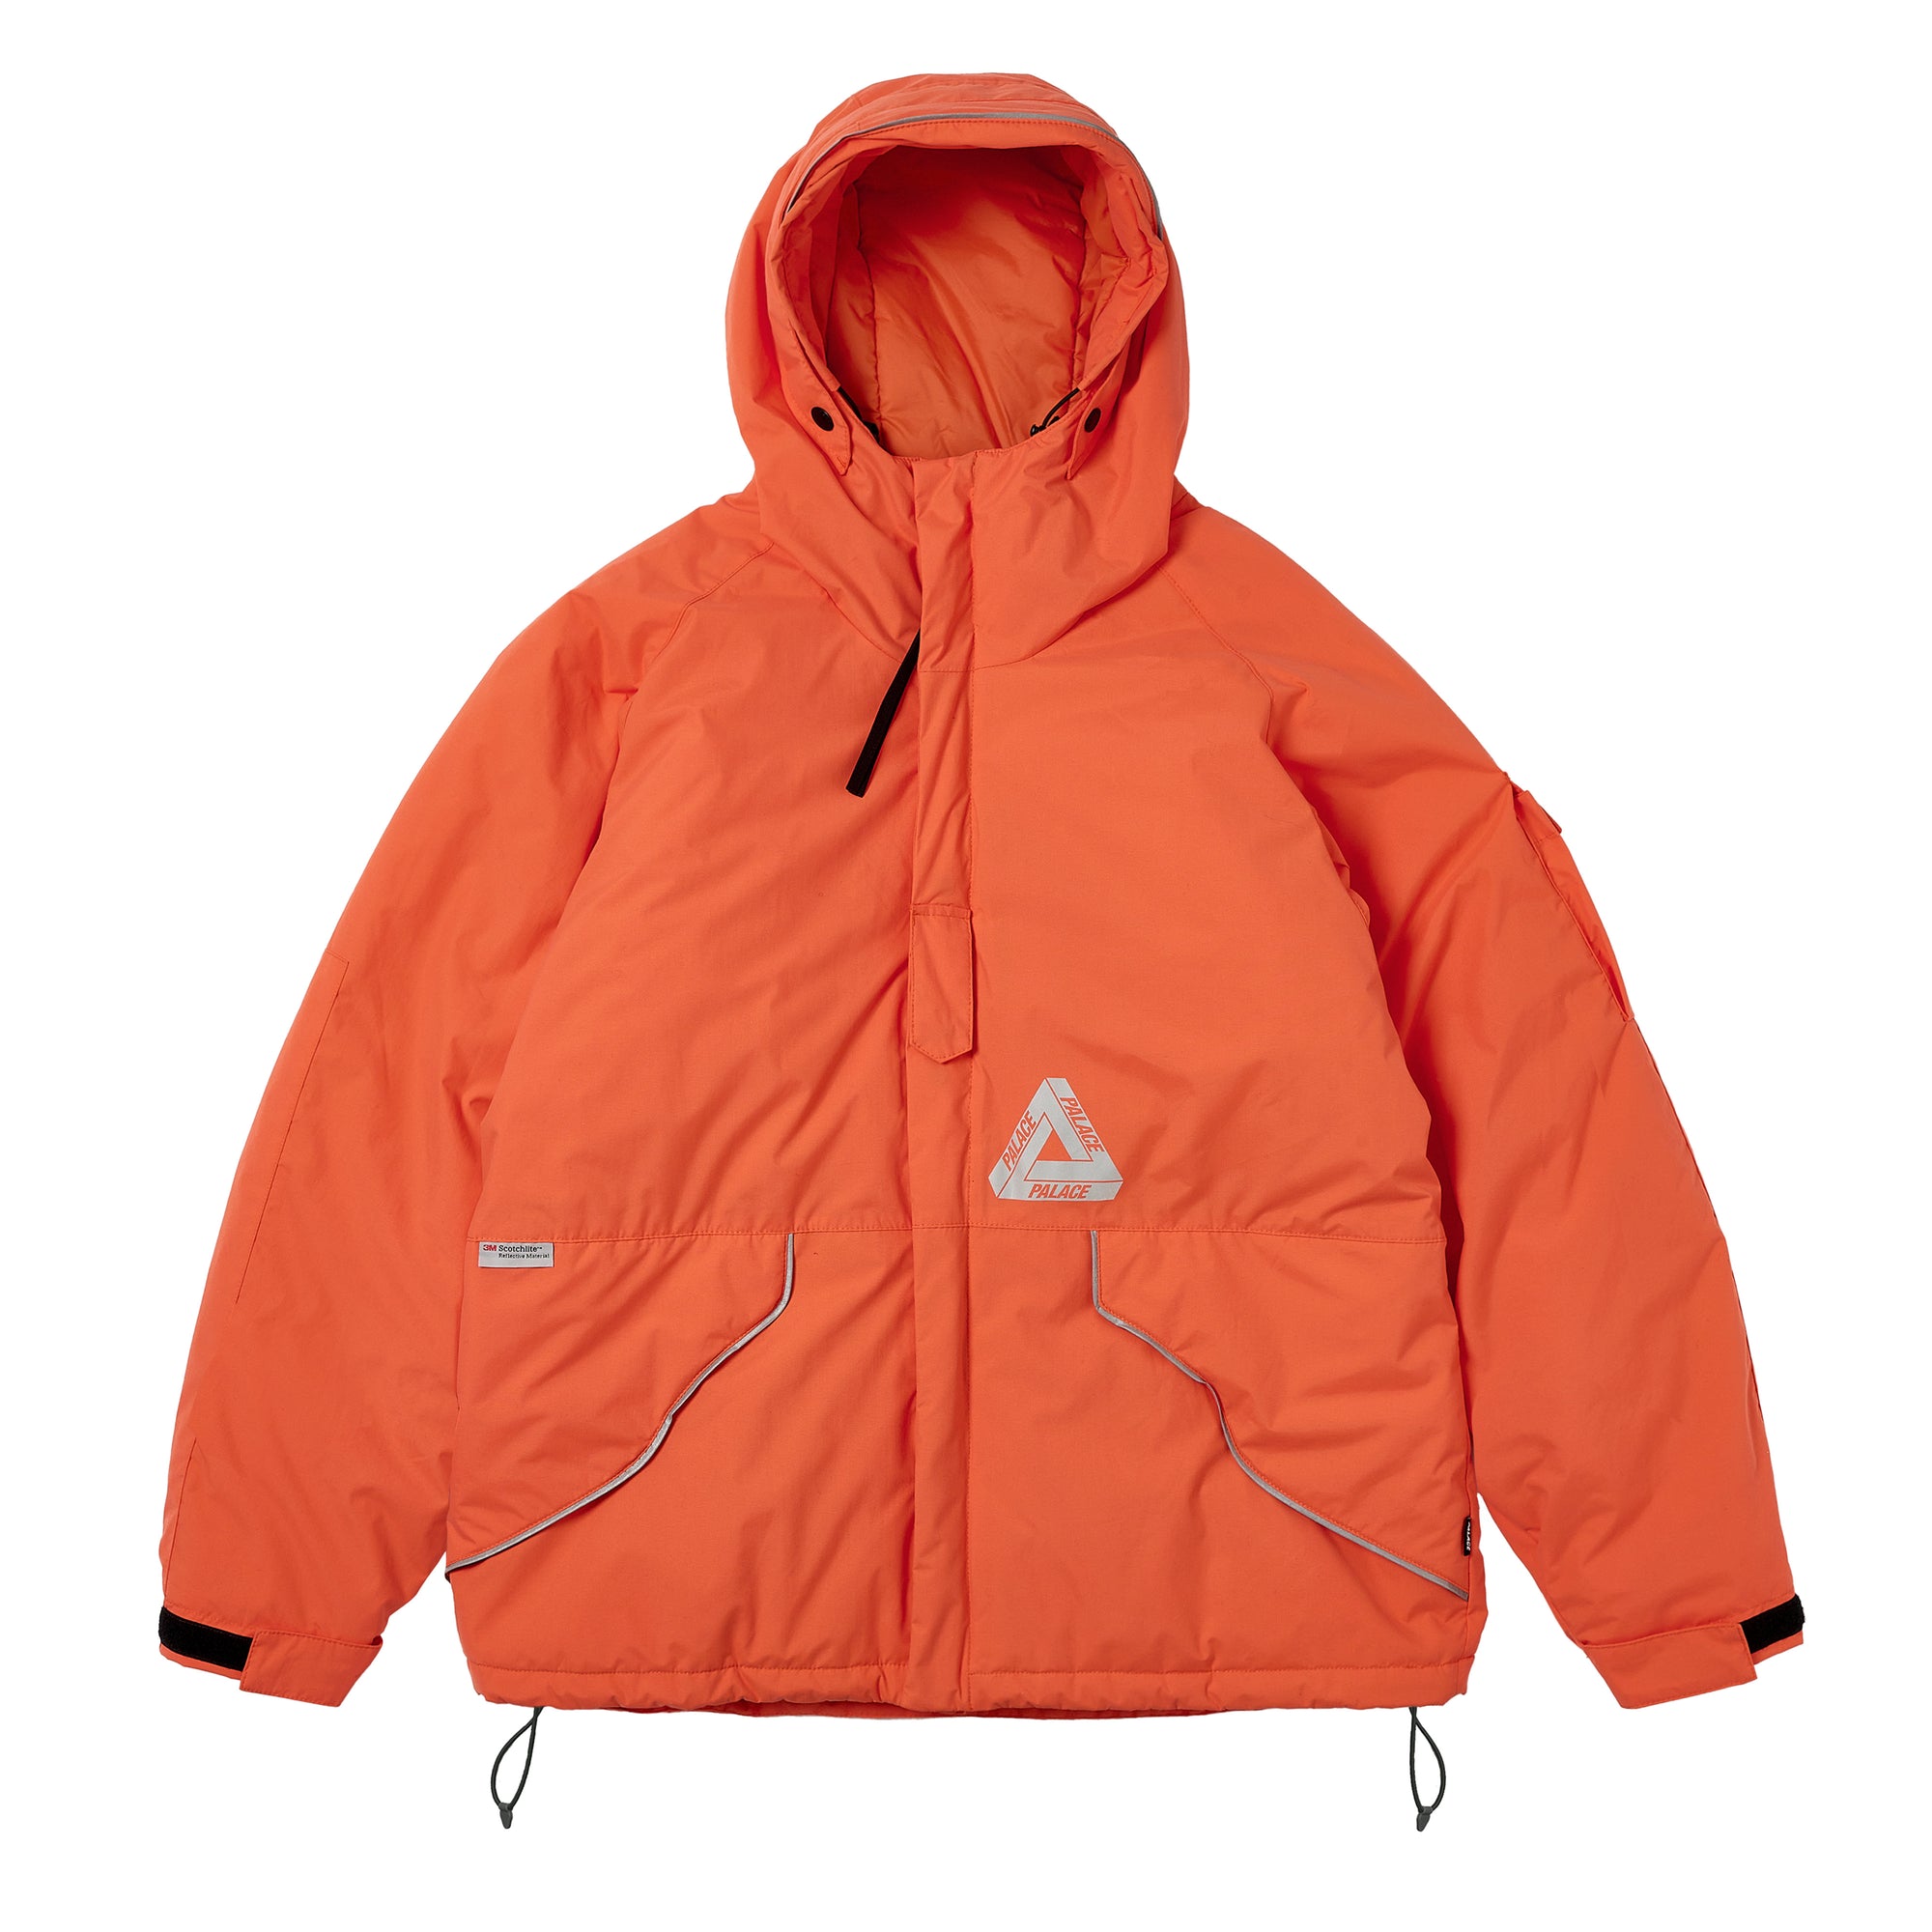 Palace - Men's P-Tech Hooded Jacket - (Orange) view 1